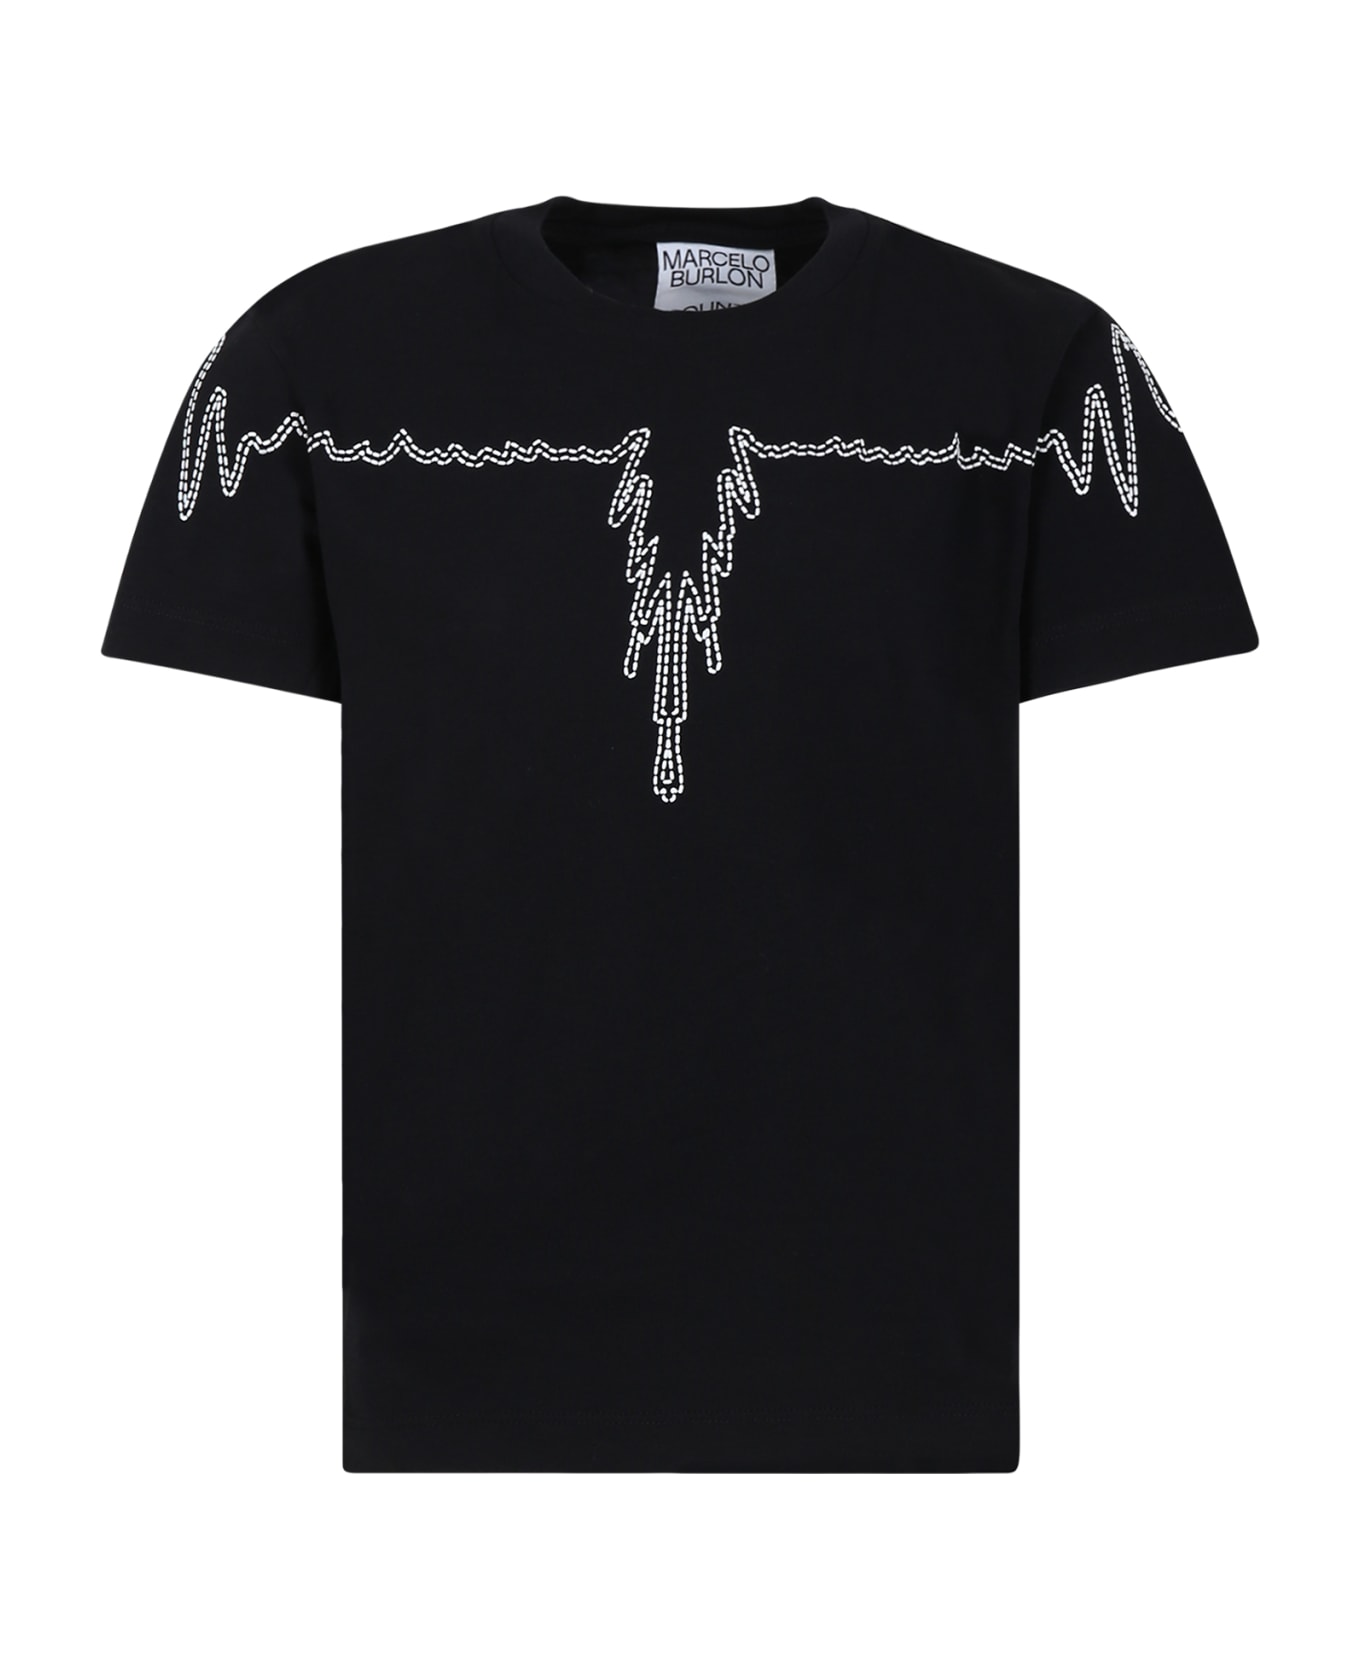 Marcelo Burlon Black T-shirt For Boy With Wings - Black Wh